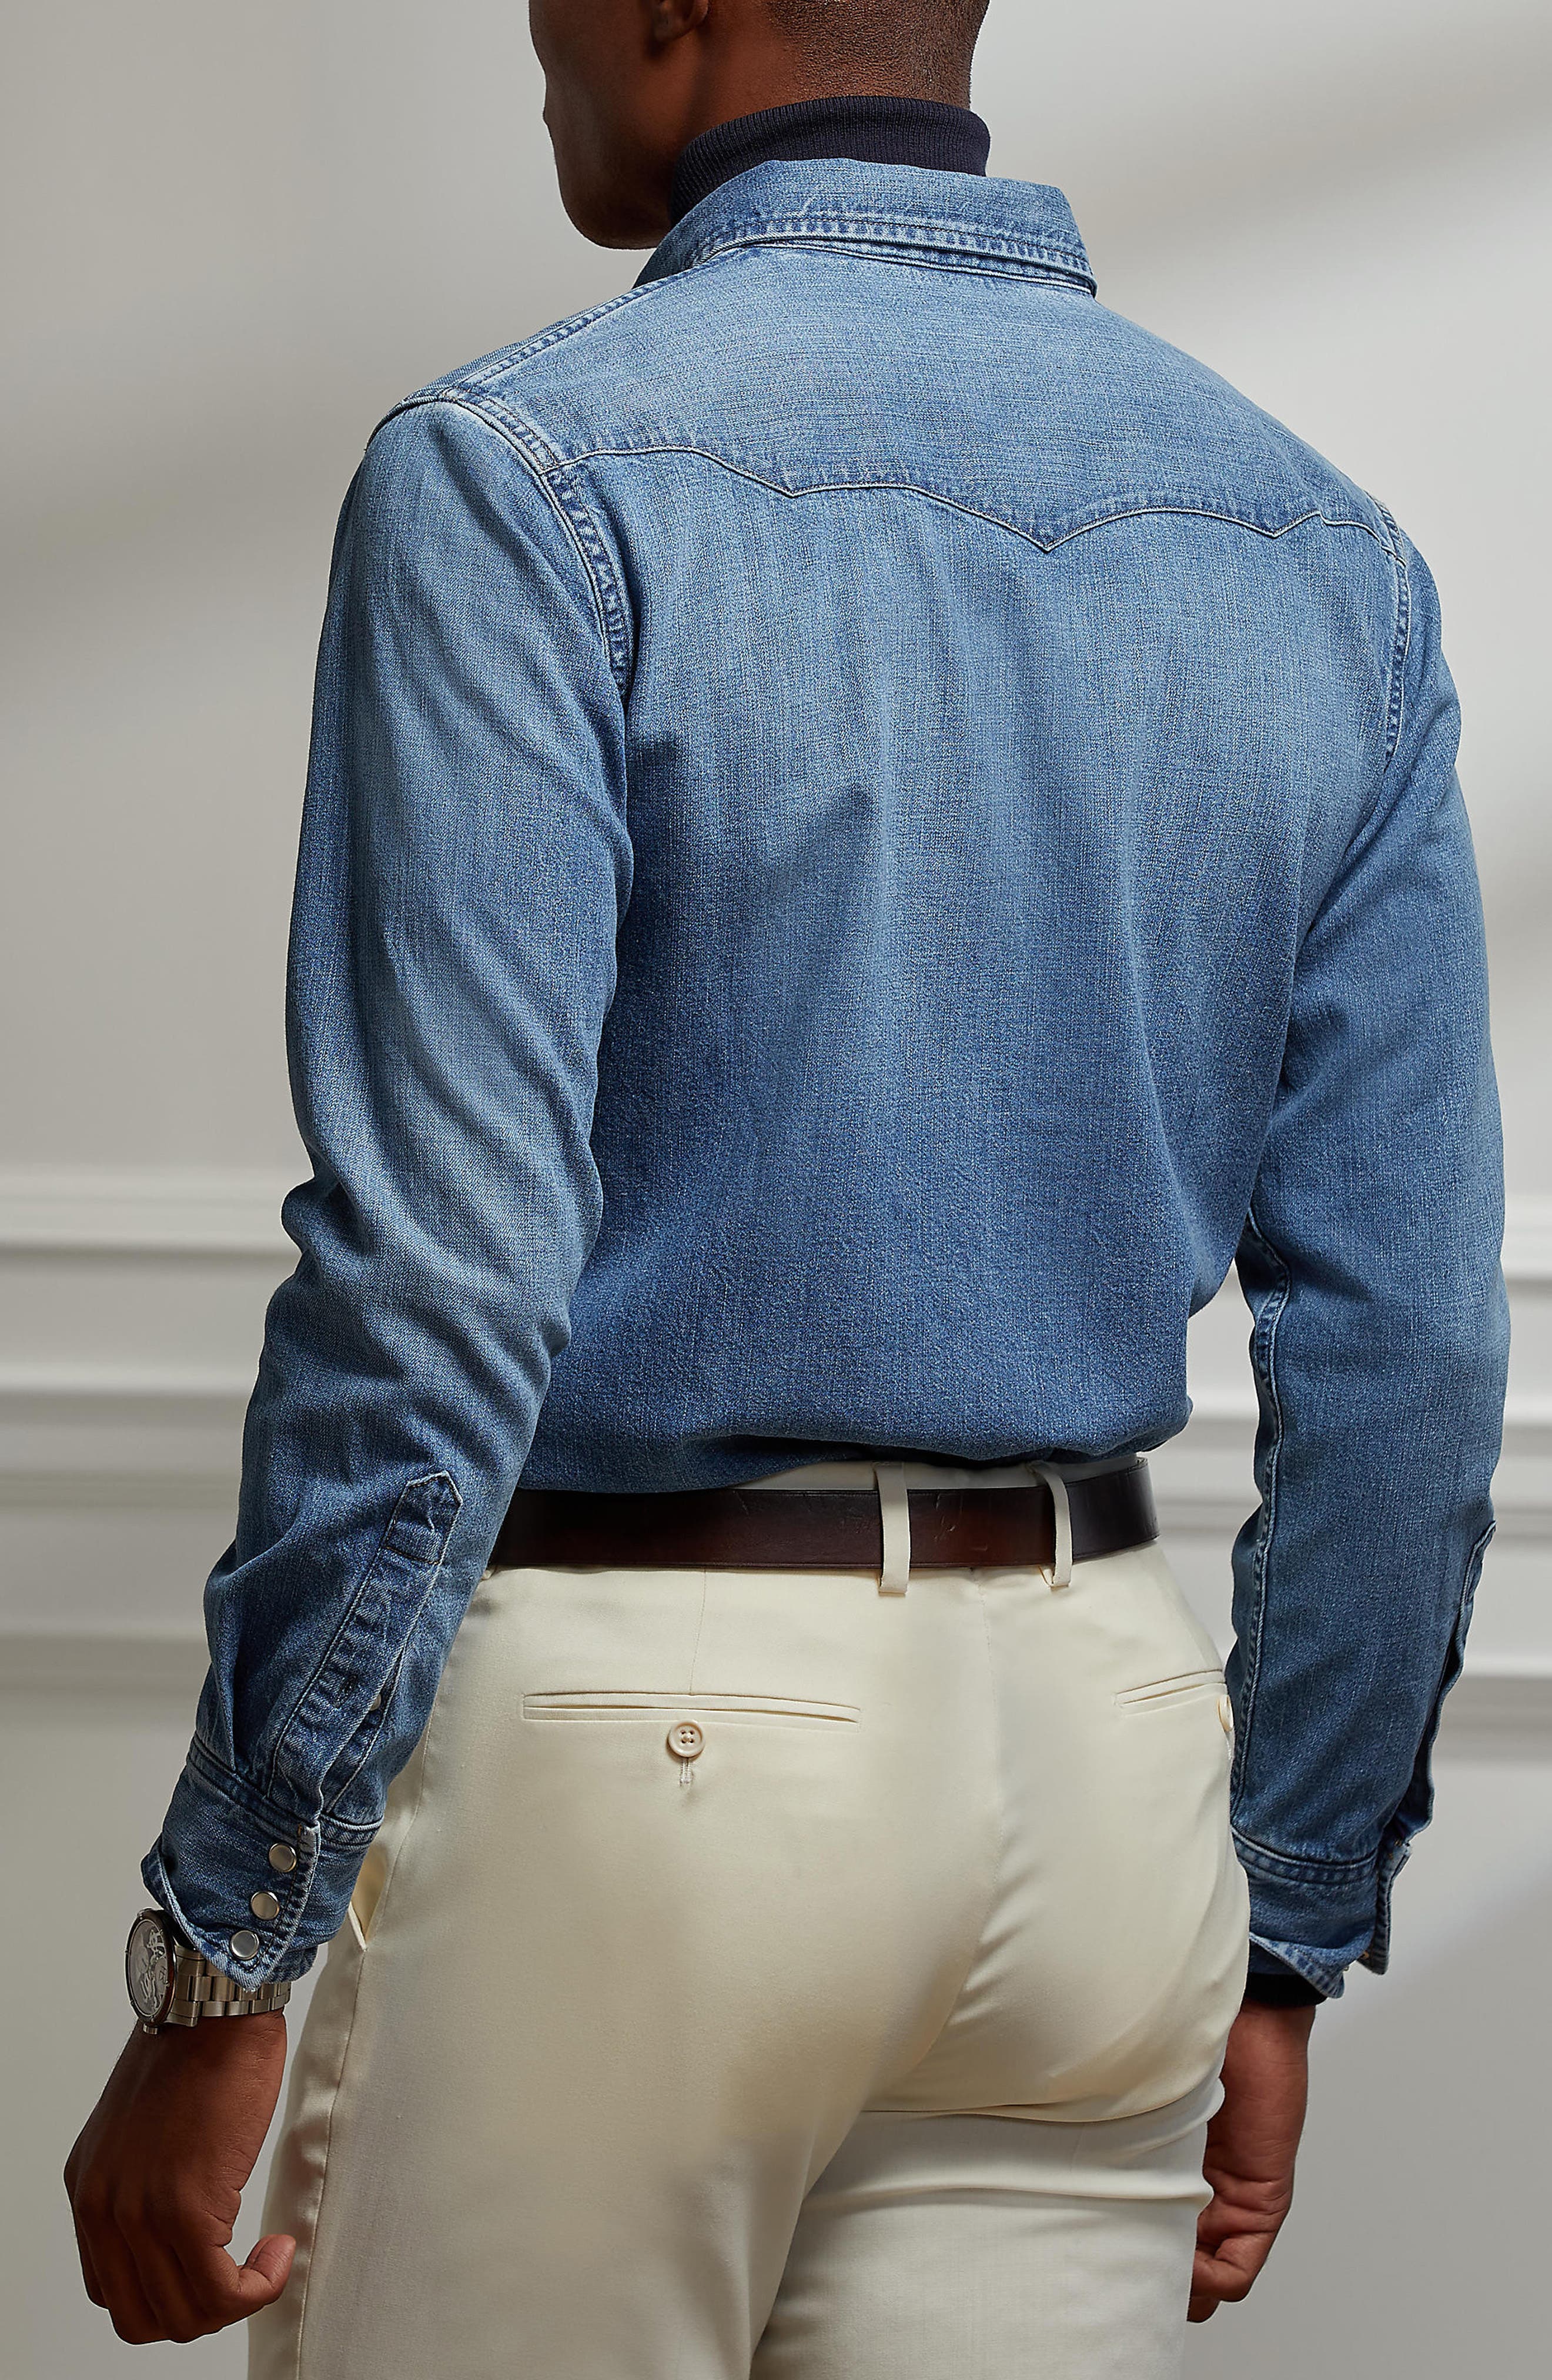 ONE NEW UNICOR Men's Pajama Shirt Light Blue Medium Snap Buttons 